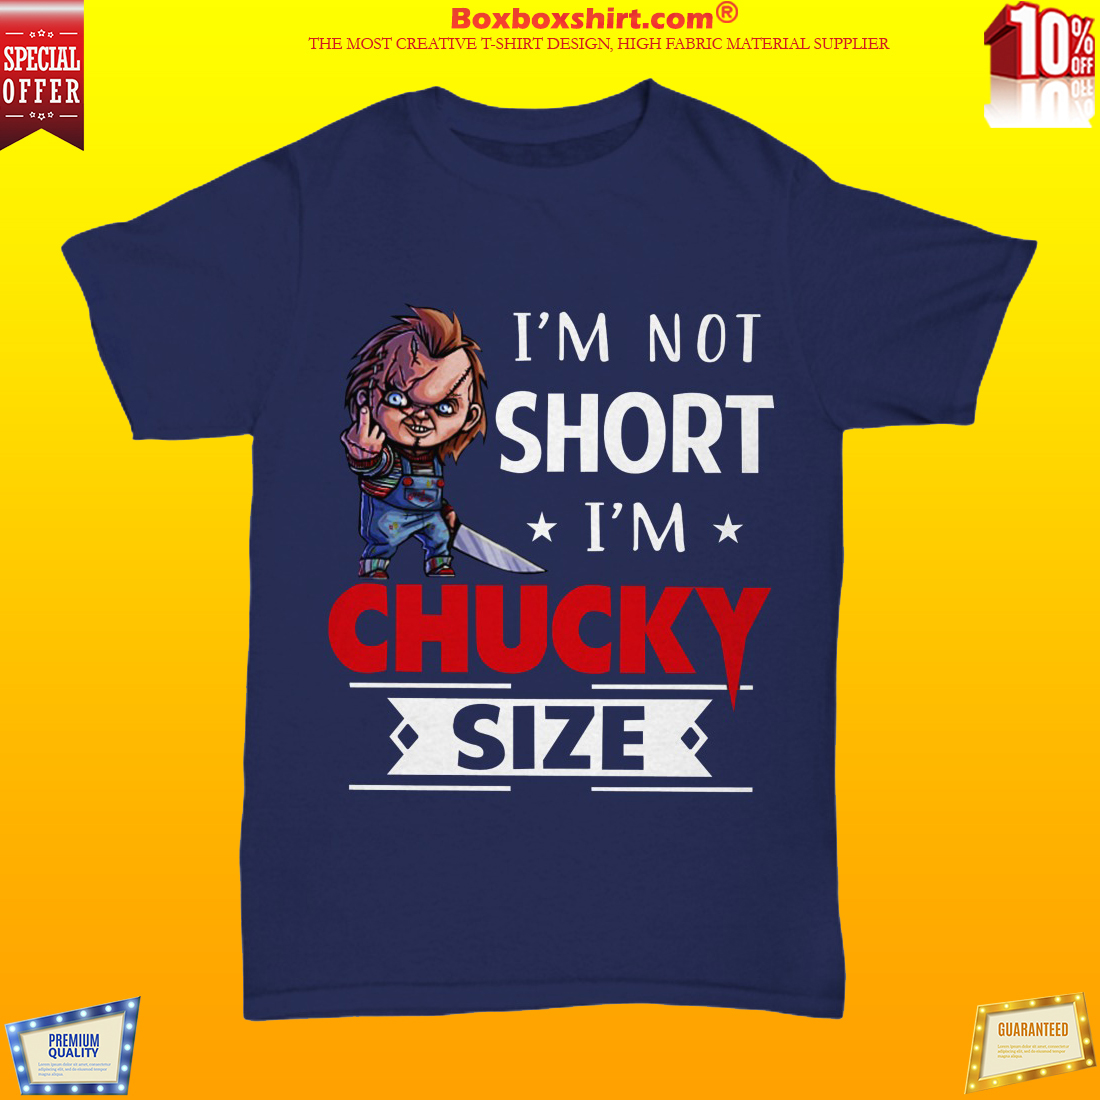 I'm not short Im Chucky size shirt and sweatshirt